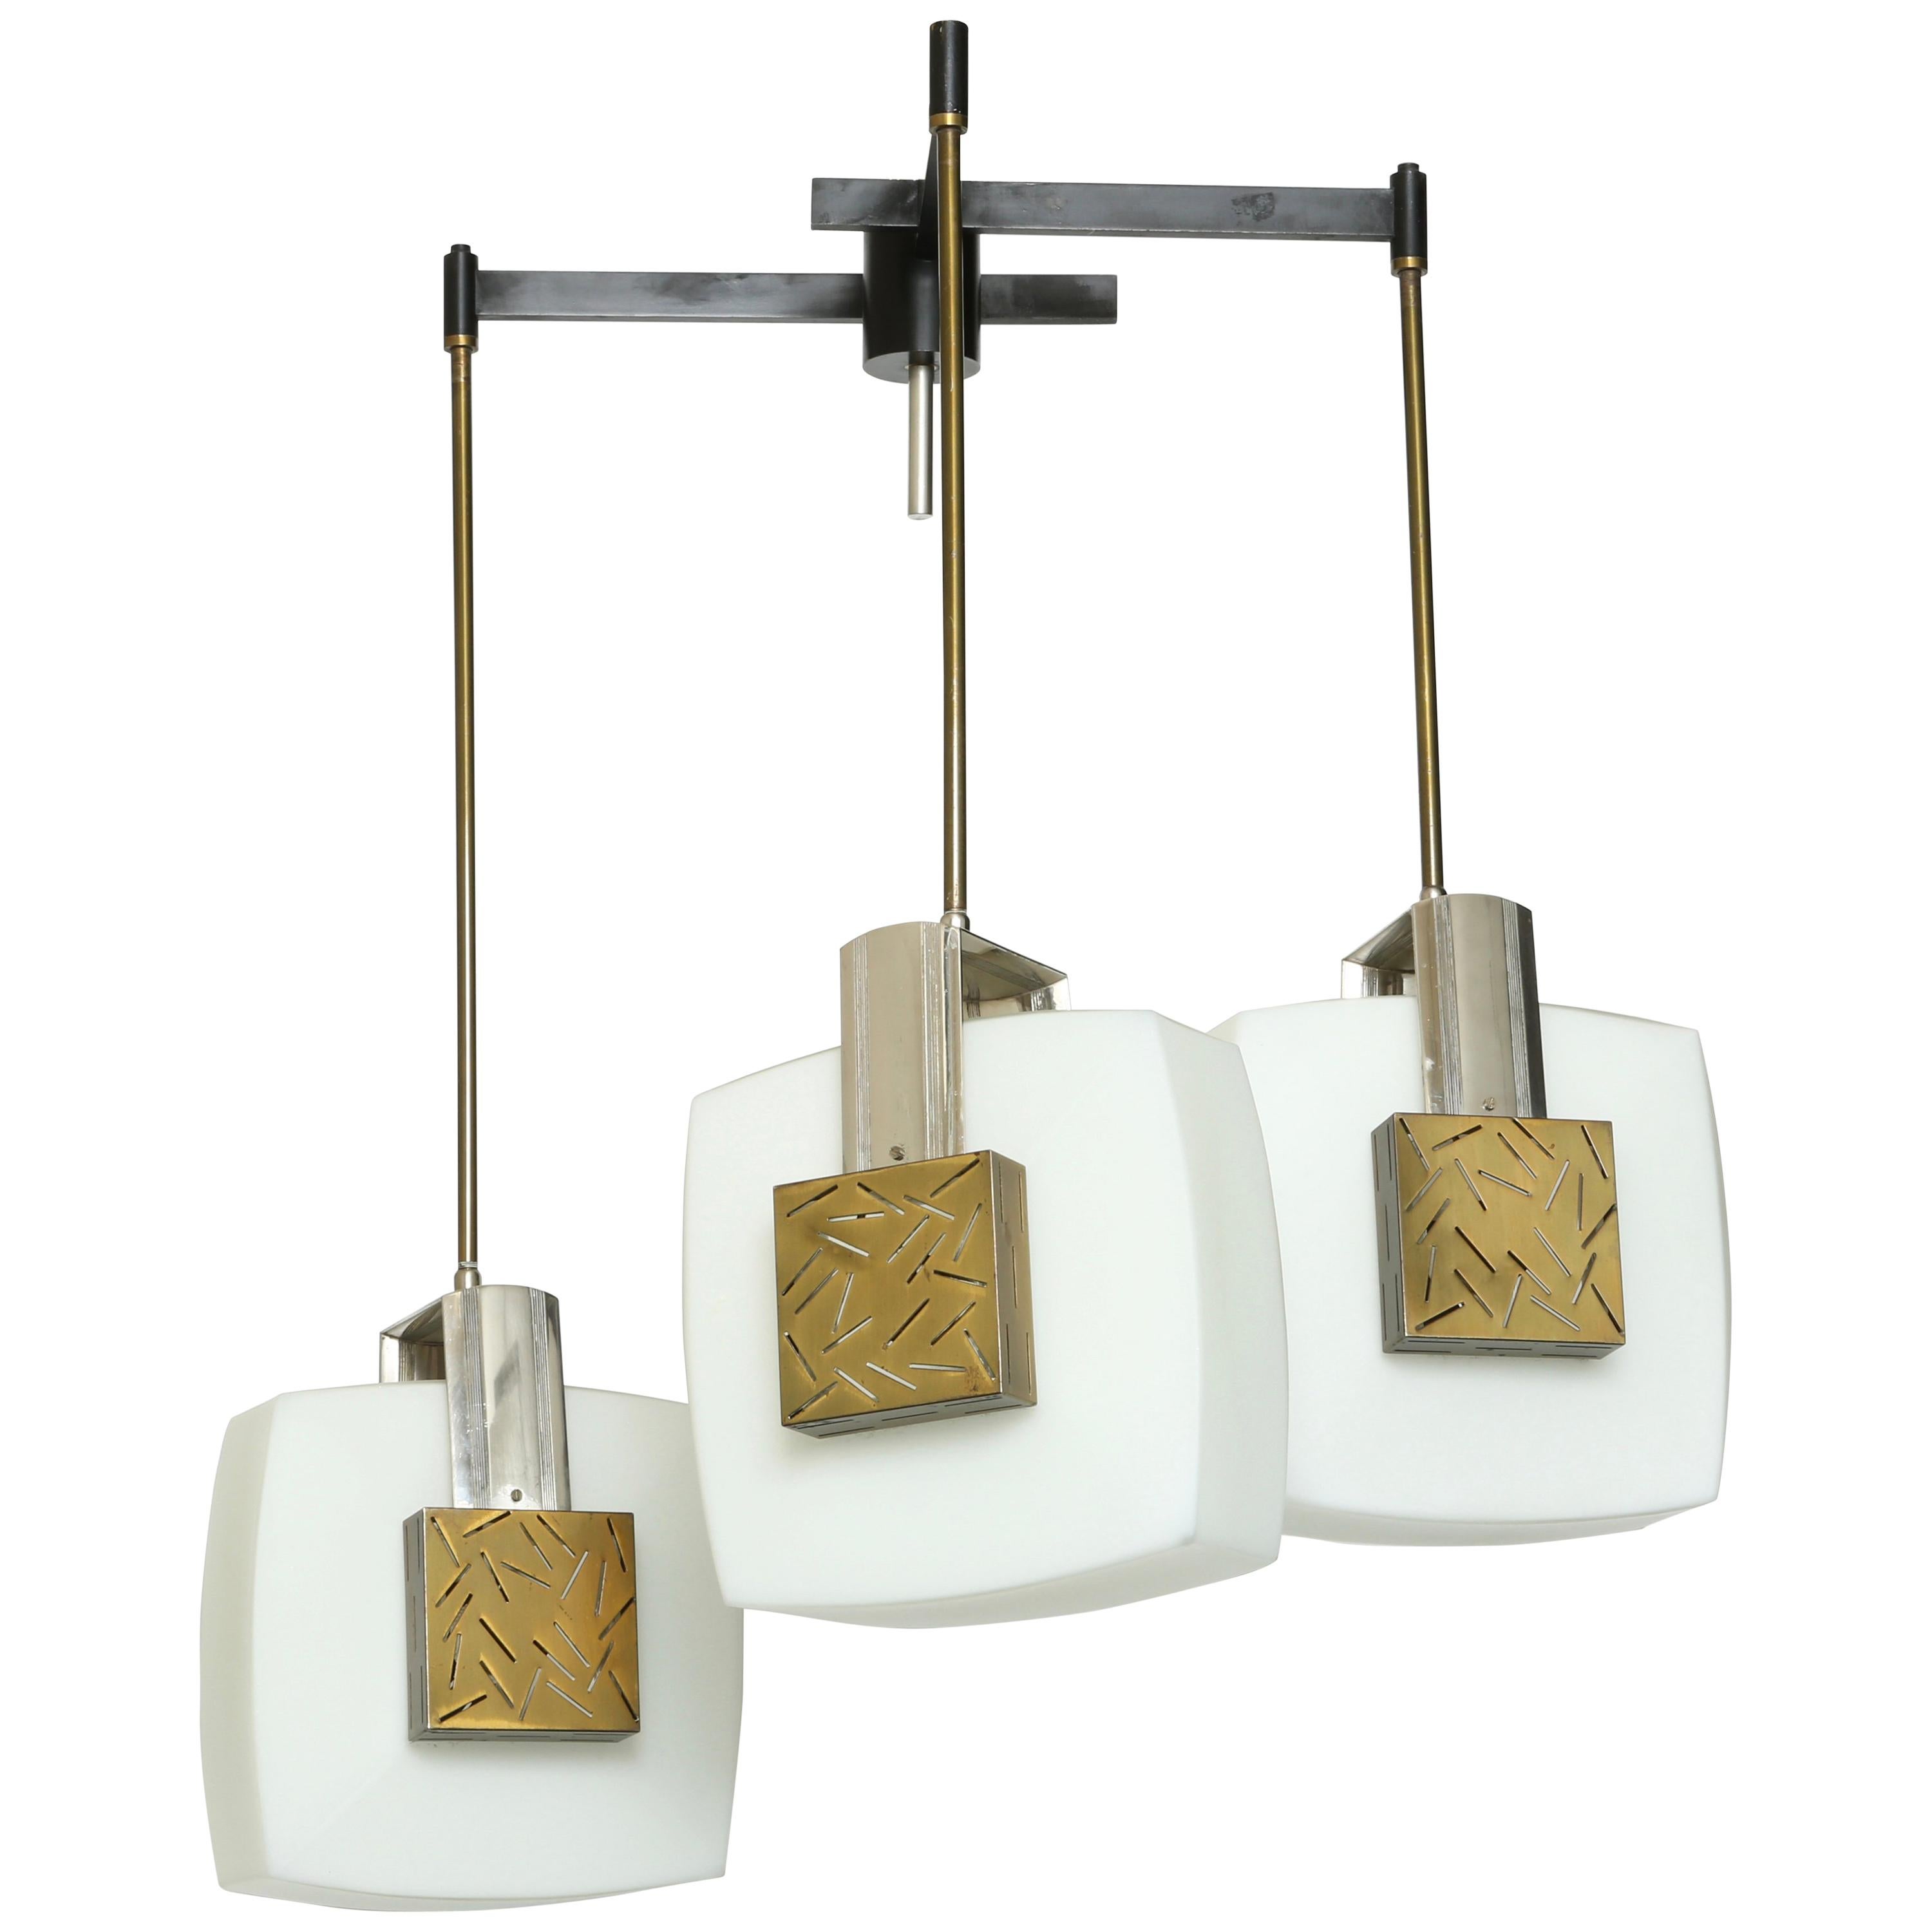 Elio Monesi for Arredoluce chandelier For Sale